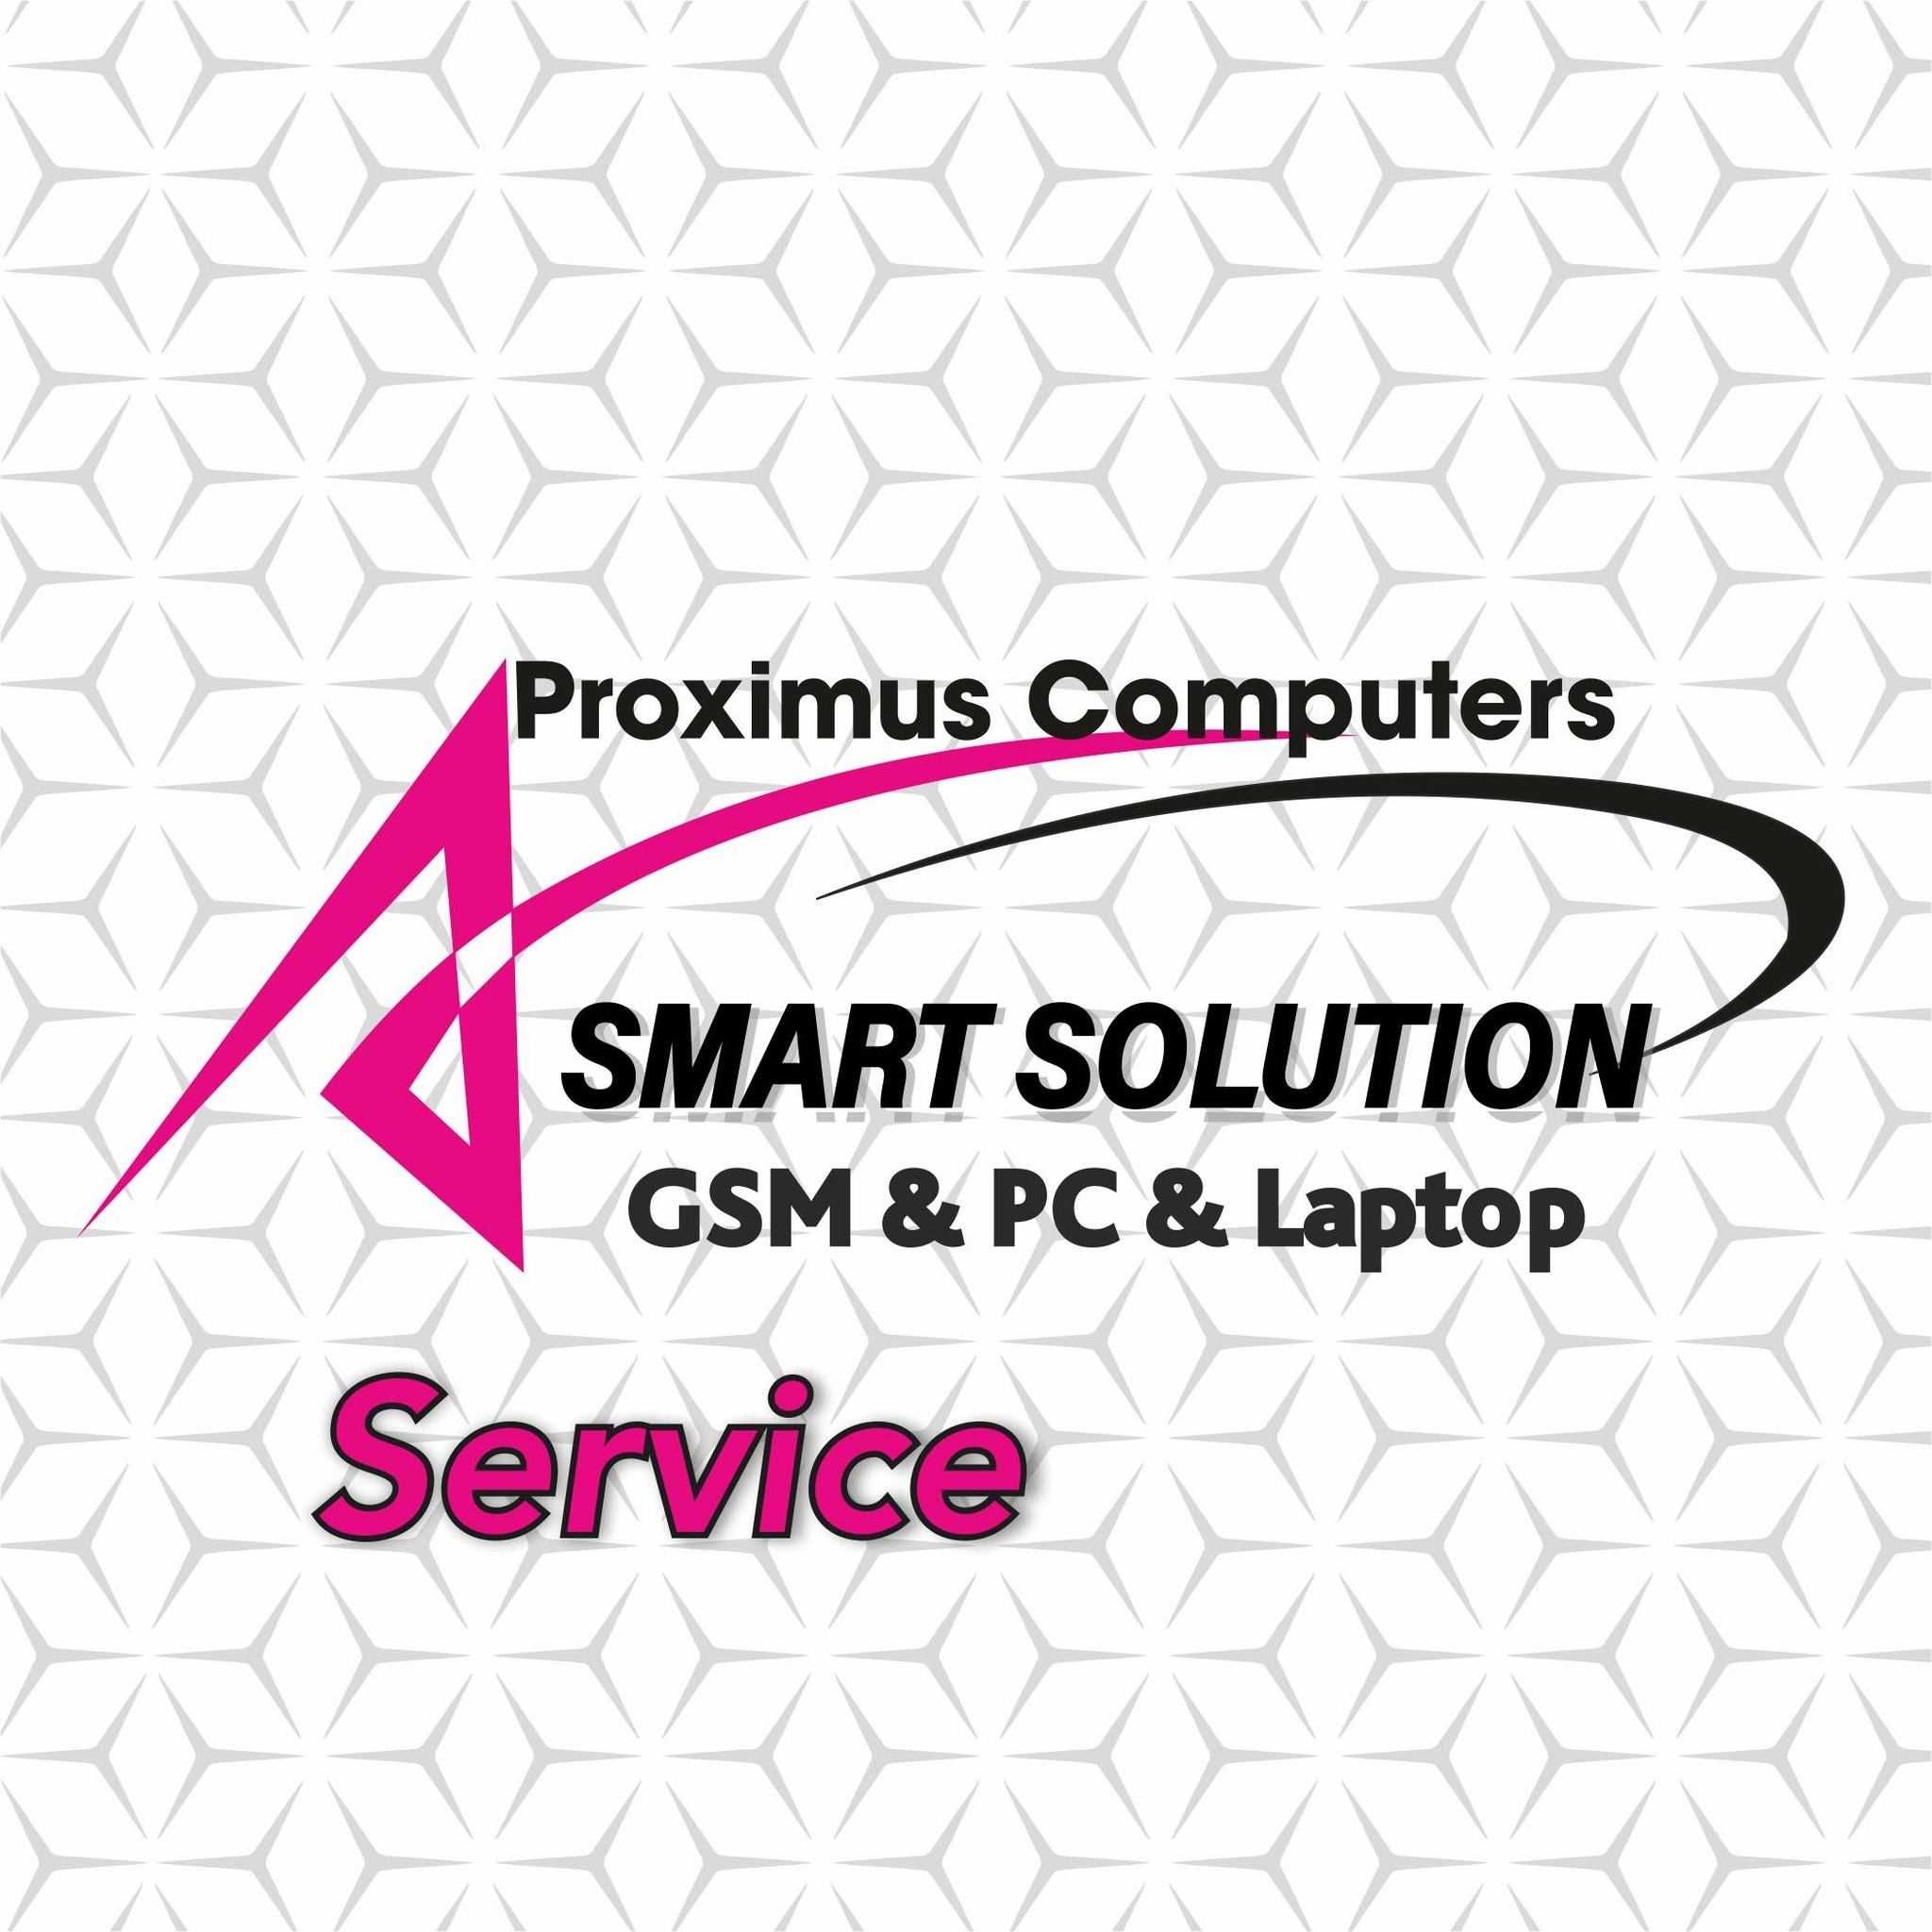 Service Proximus Computers GSM, Display, baterii, reparatii alimentare